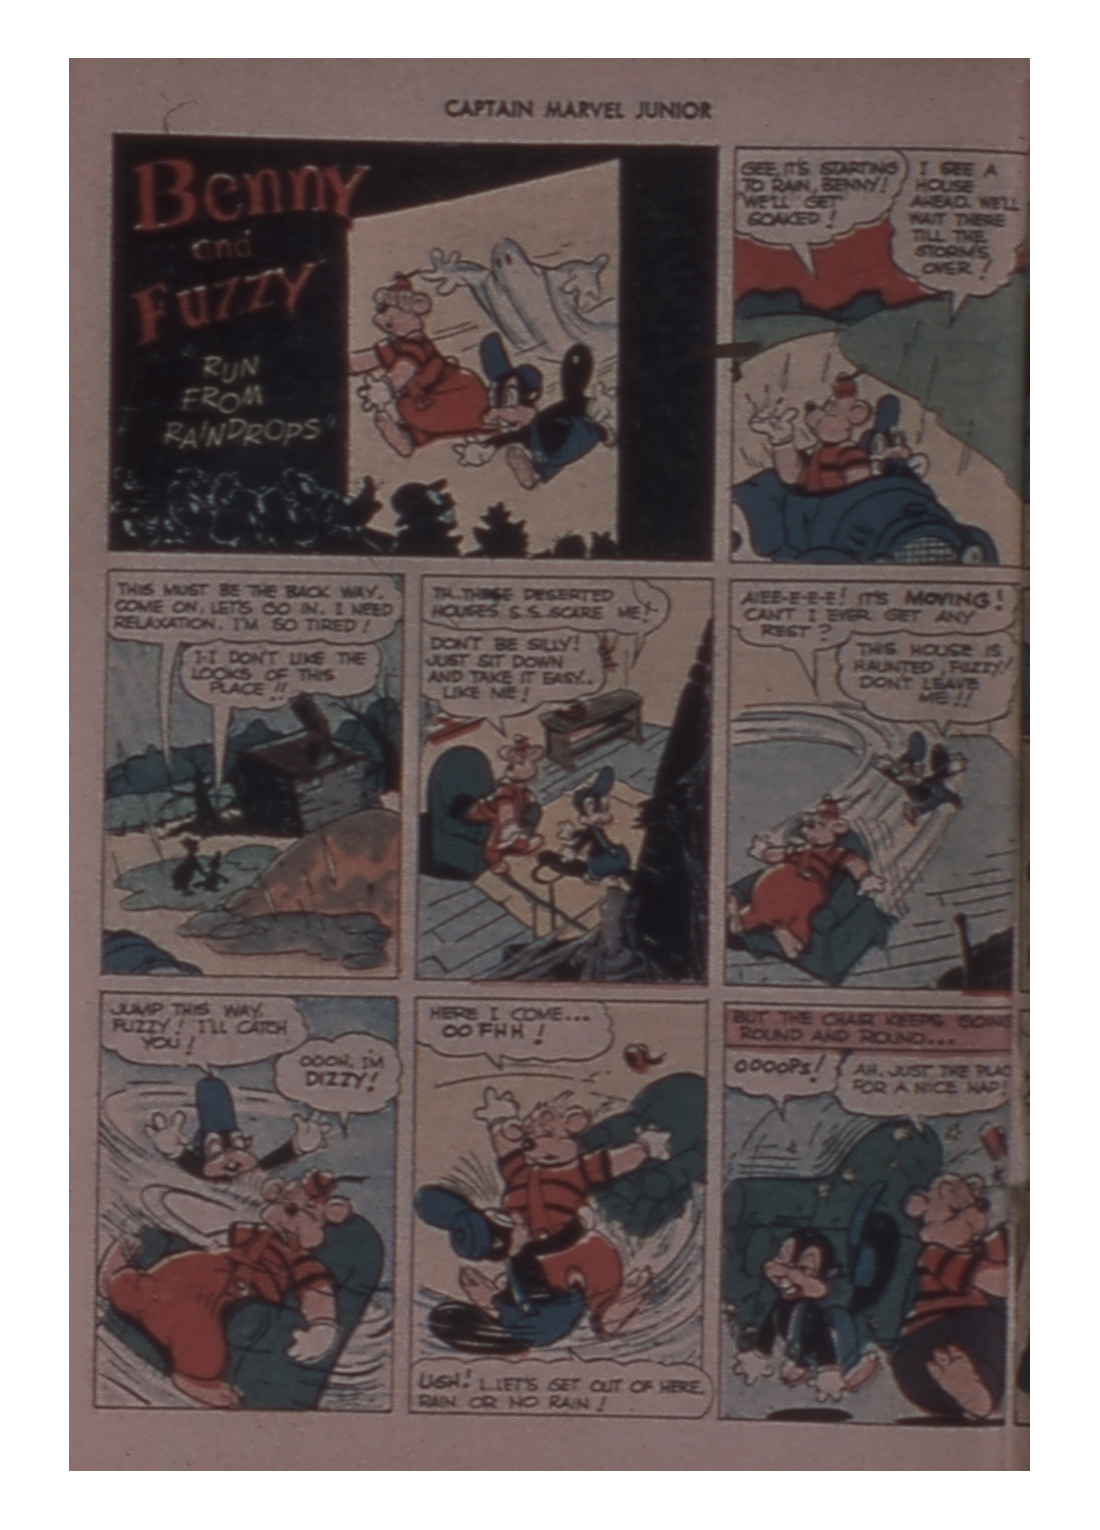 Read online Captain Marvel, Jr. comic -  Issue #65 - 40